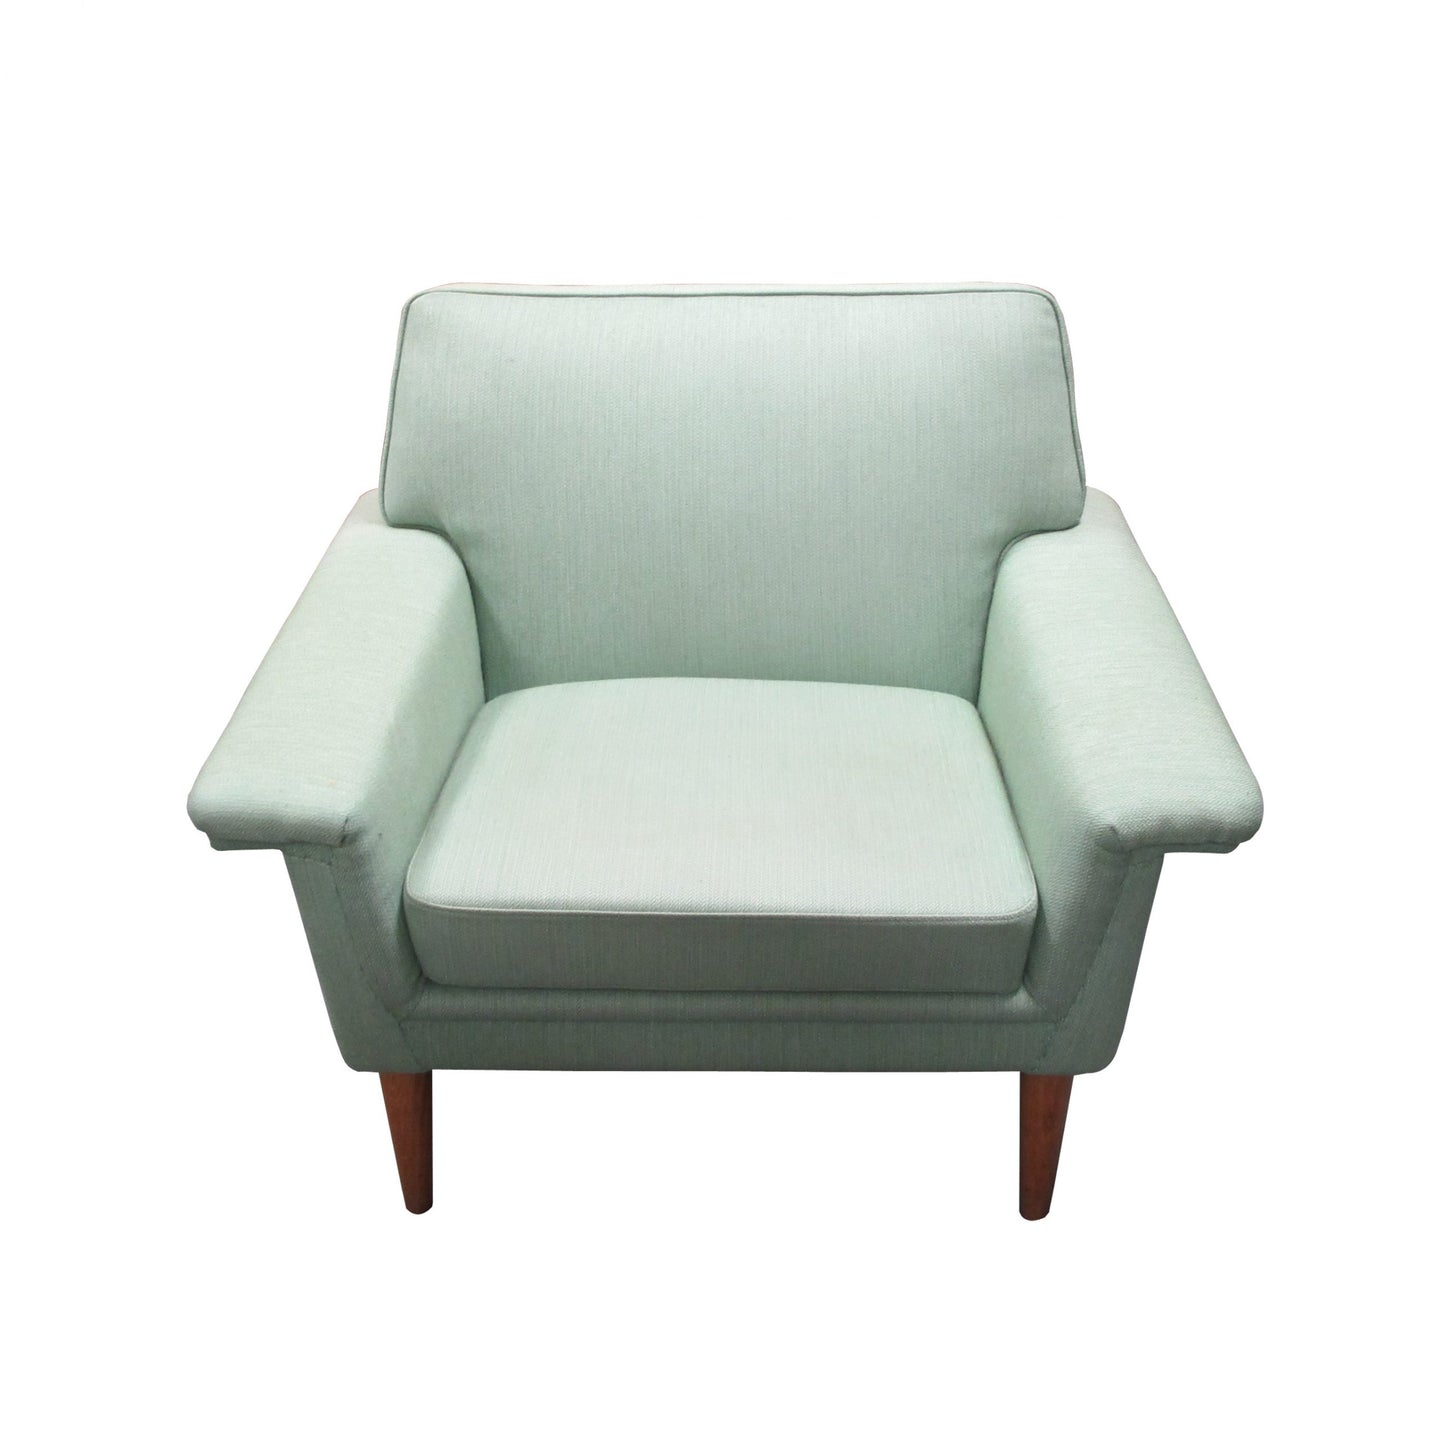 A mid century single armchair, Swedish